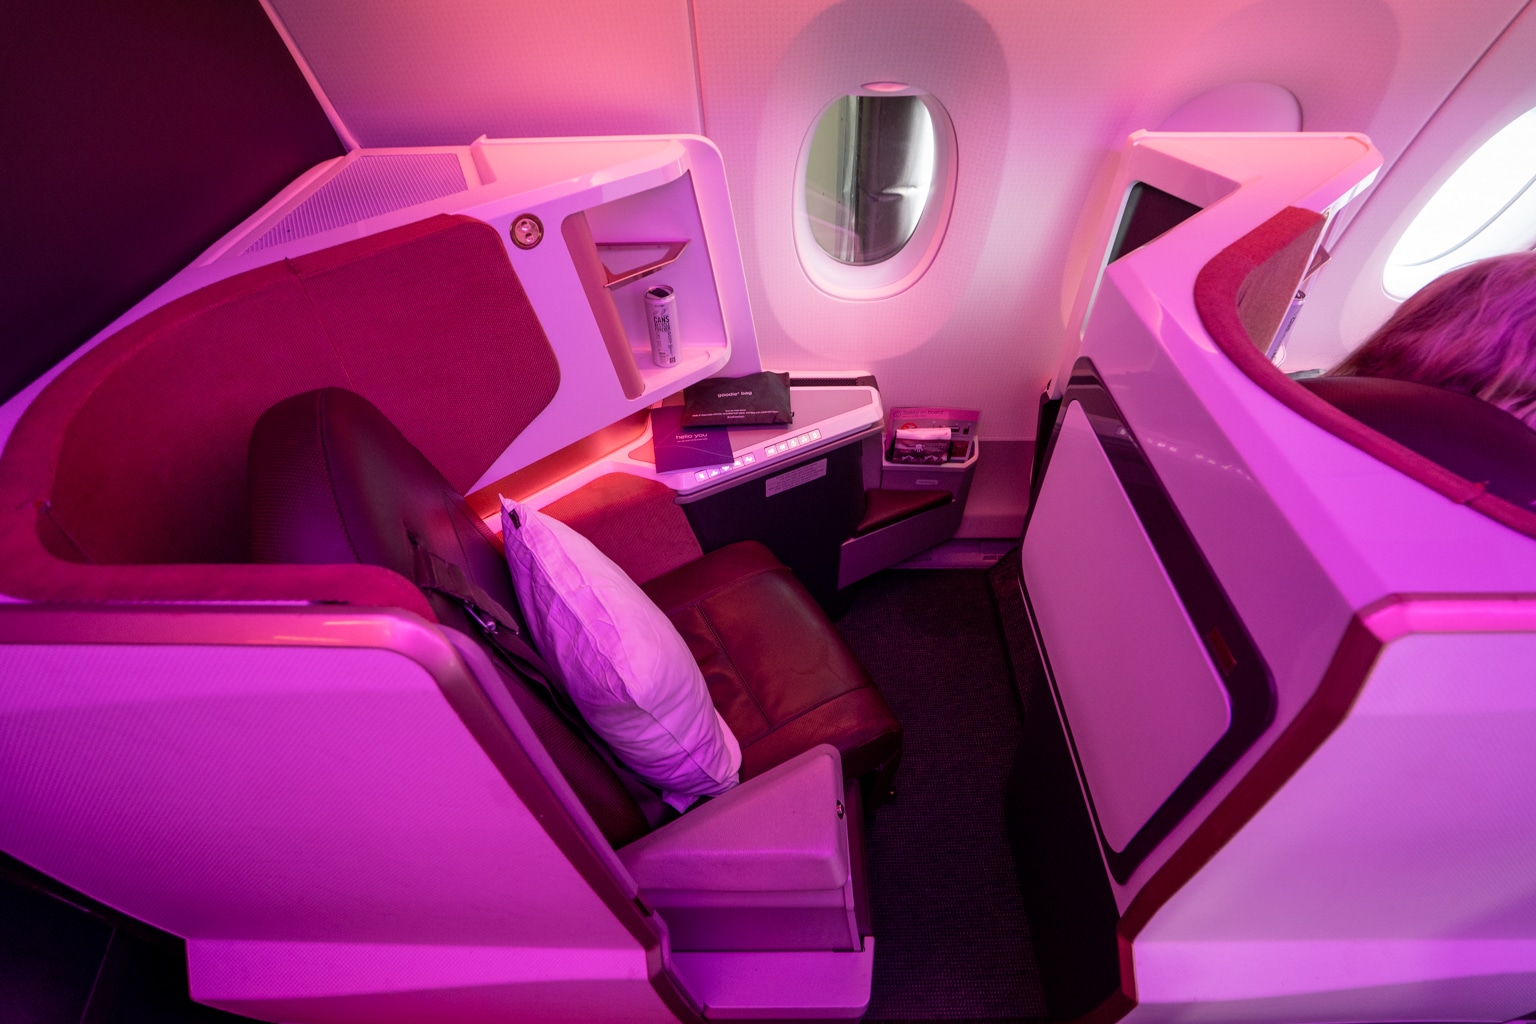 Review: Virgin Atlantic A350 Upper Class London to New York